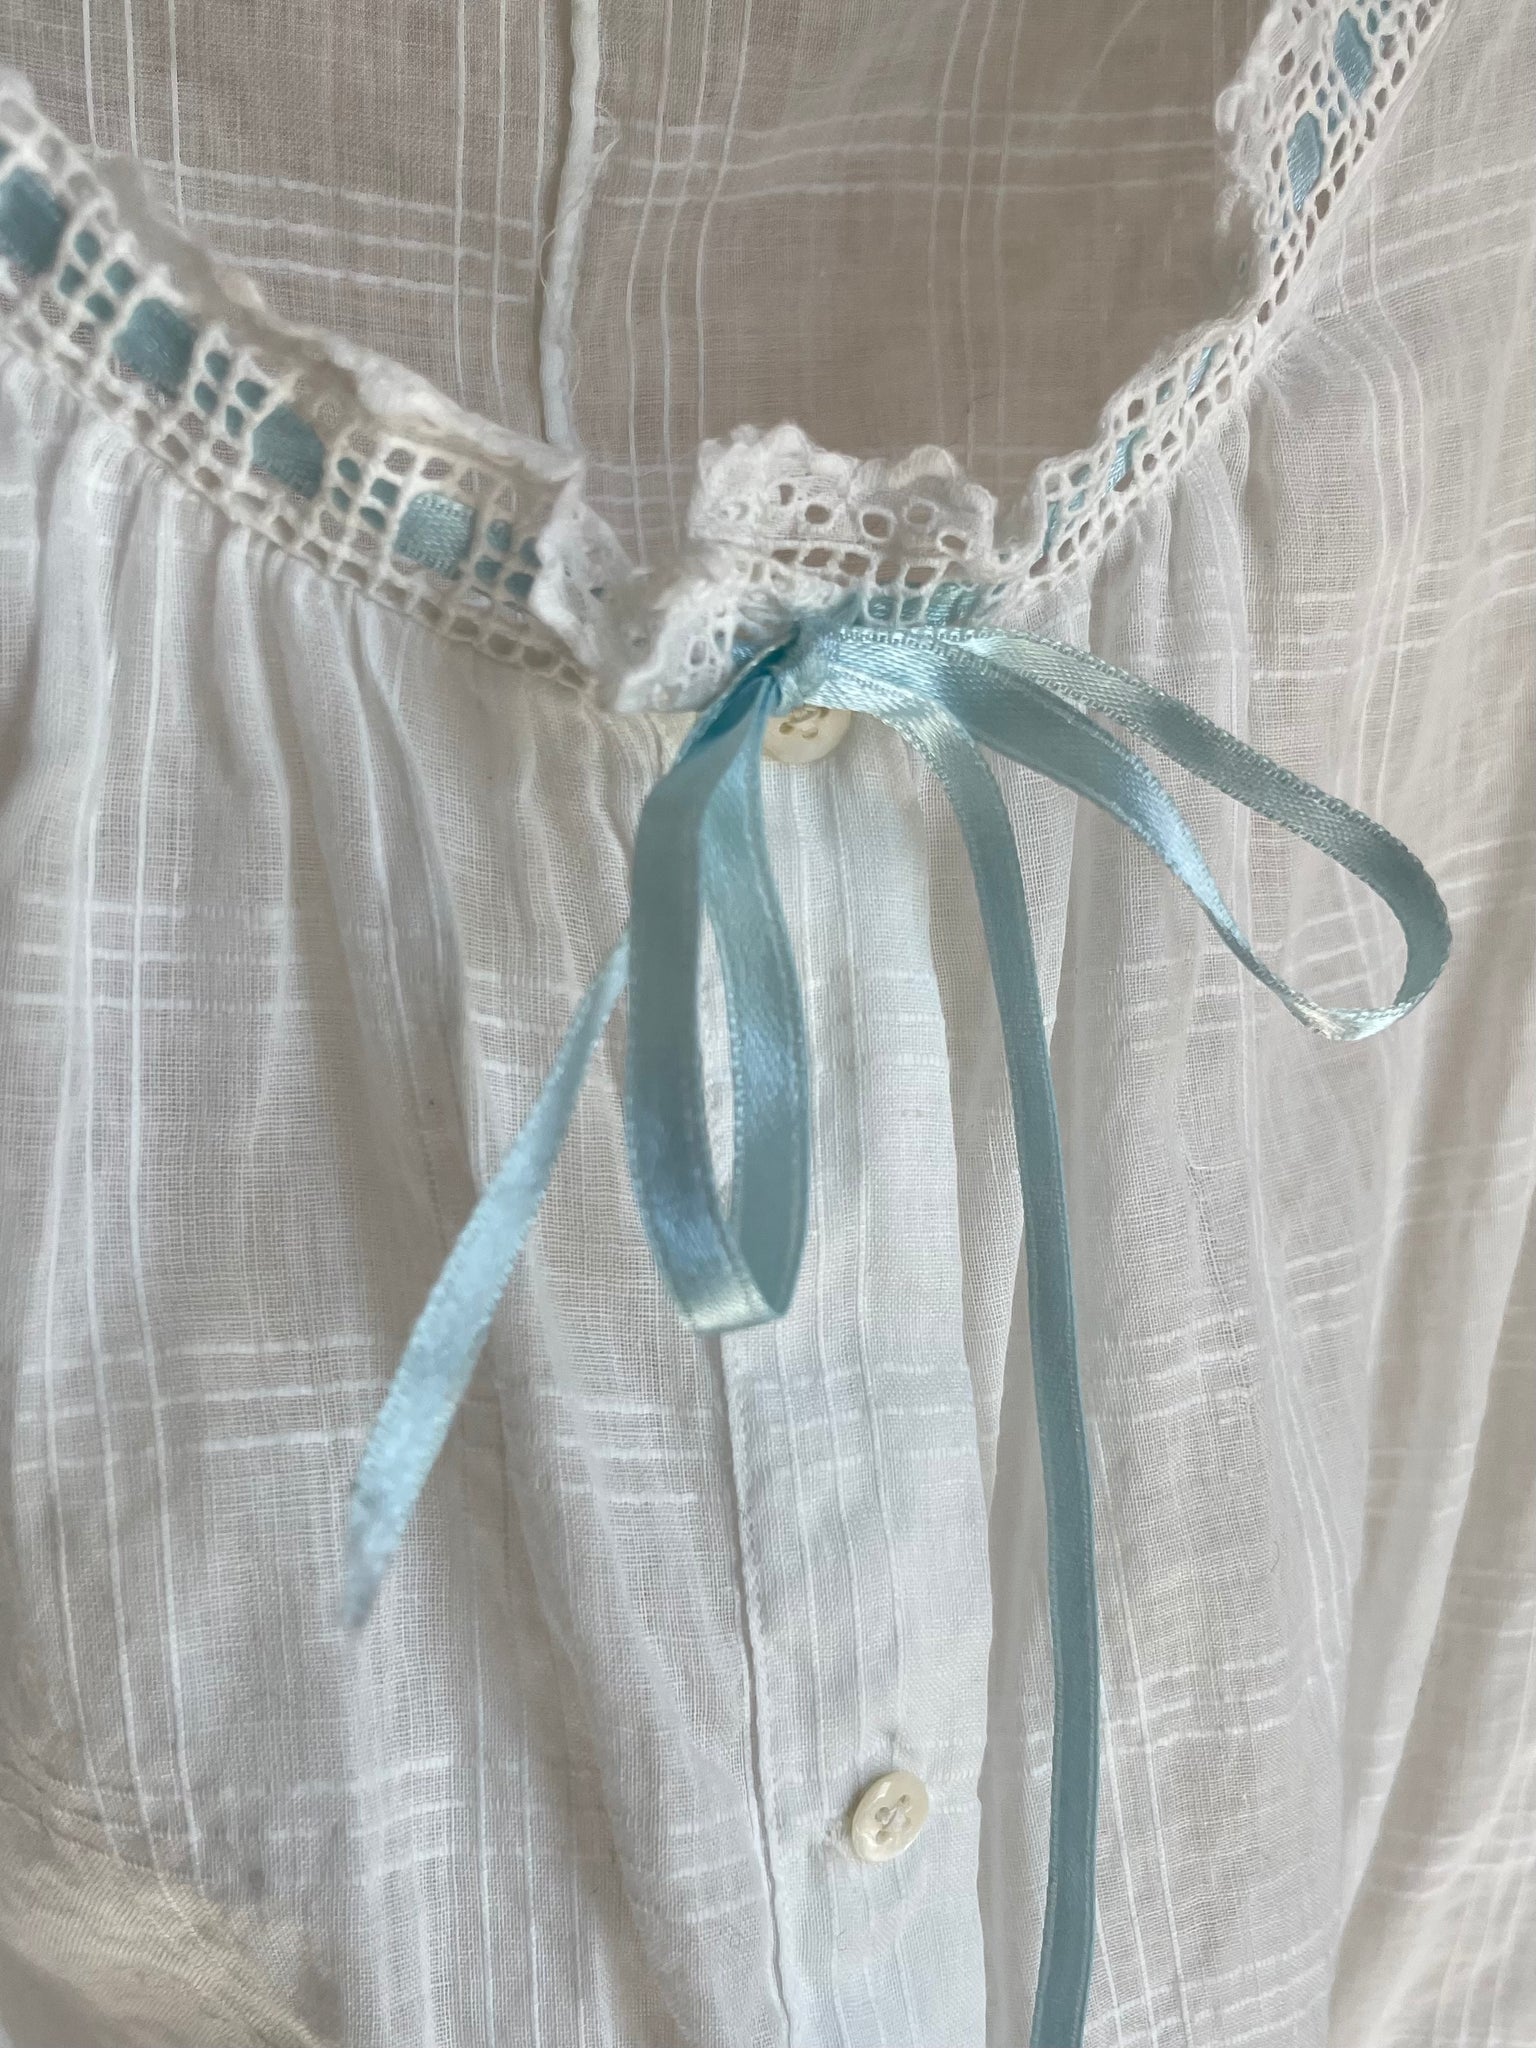 1900s Corset Cover Window Pane White Cotton Light Blue Ribbon Bow